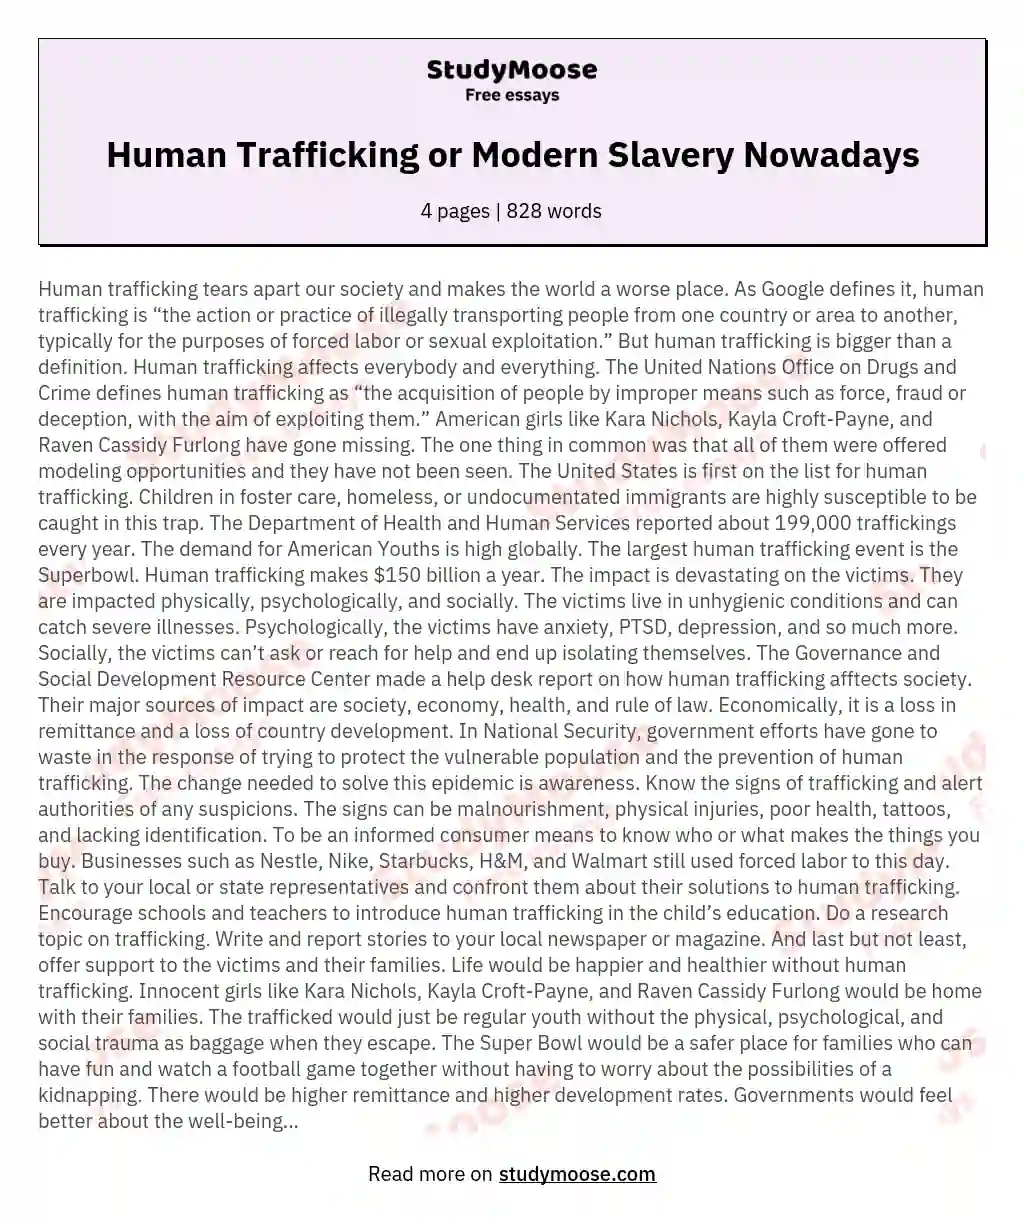 Human Trafficking or Modern Slavery Nowadays essay